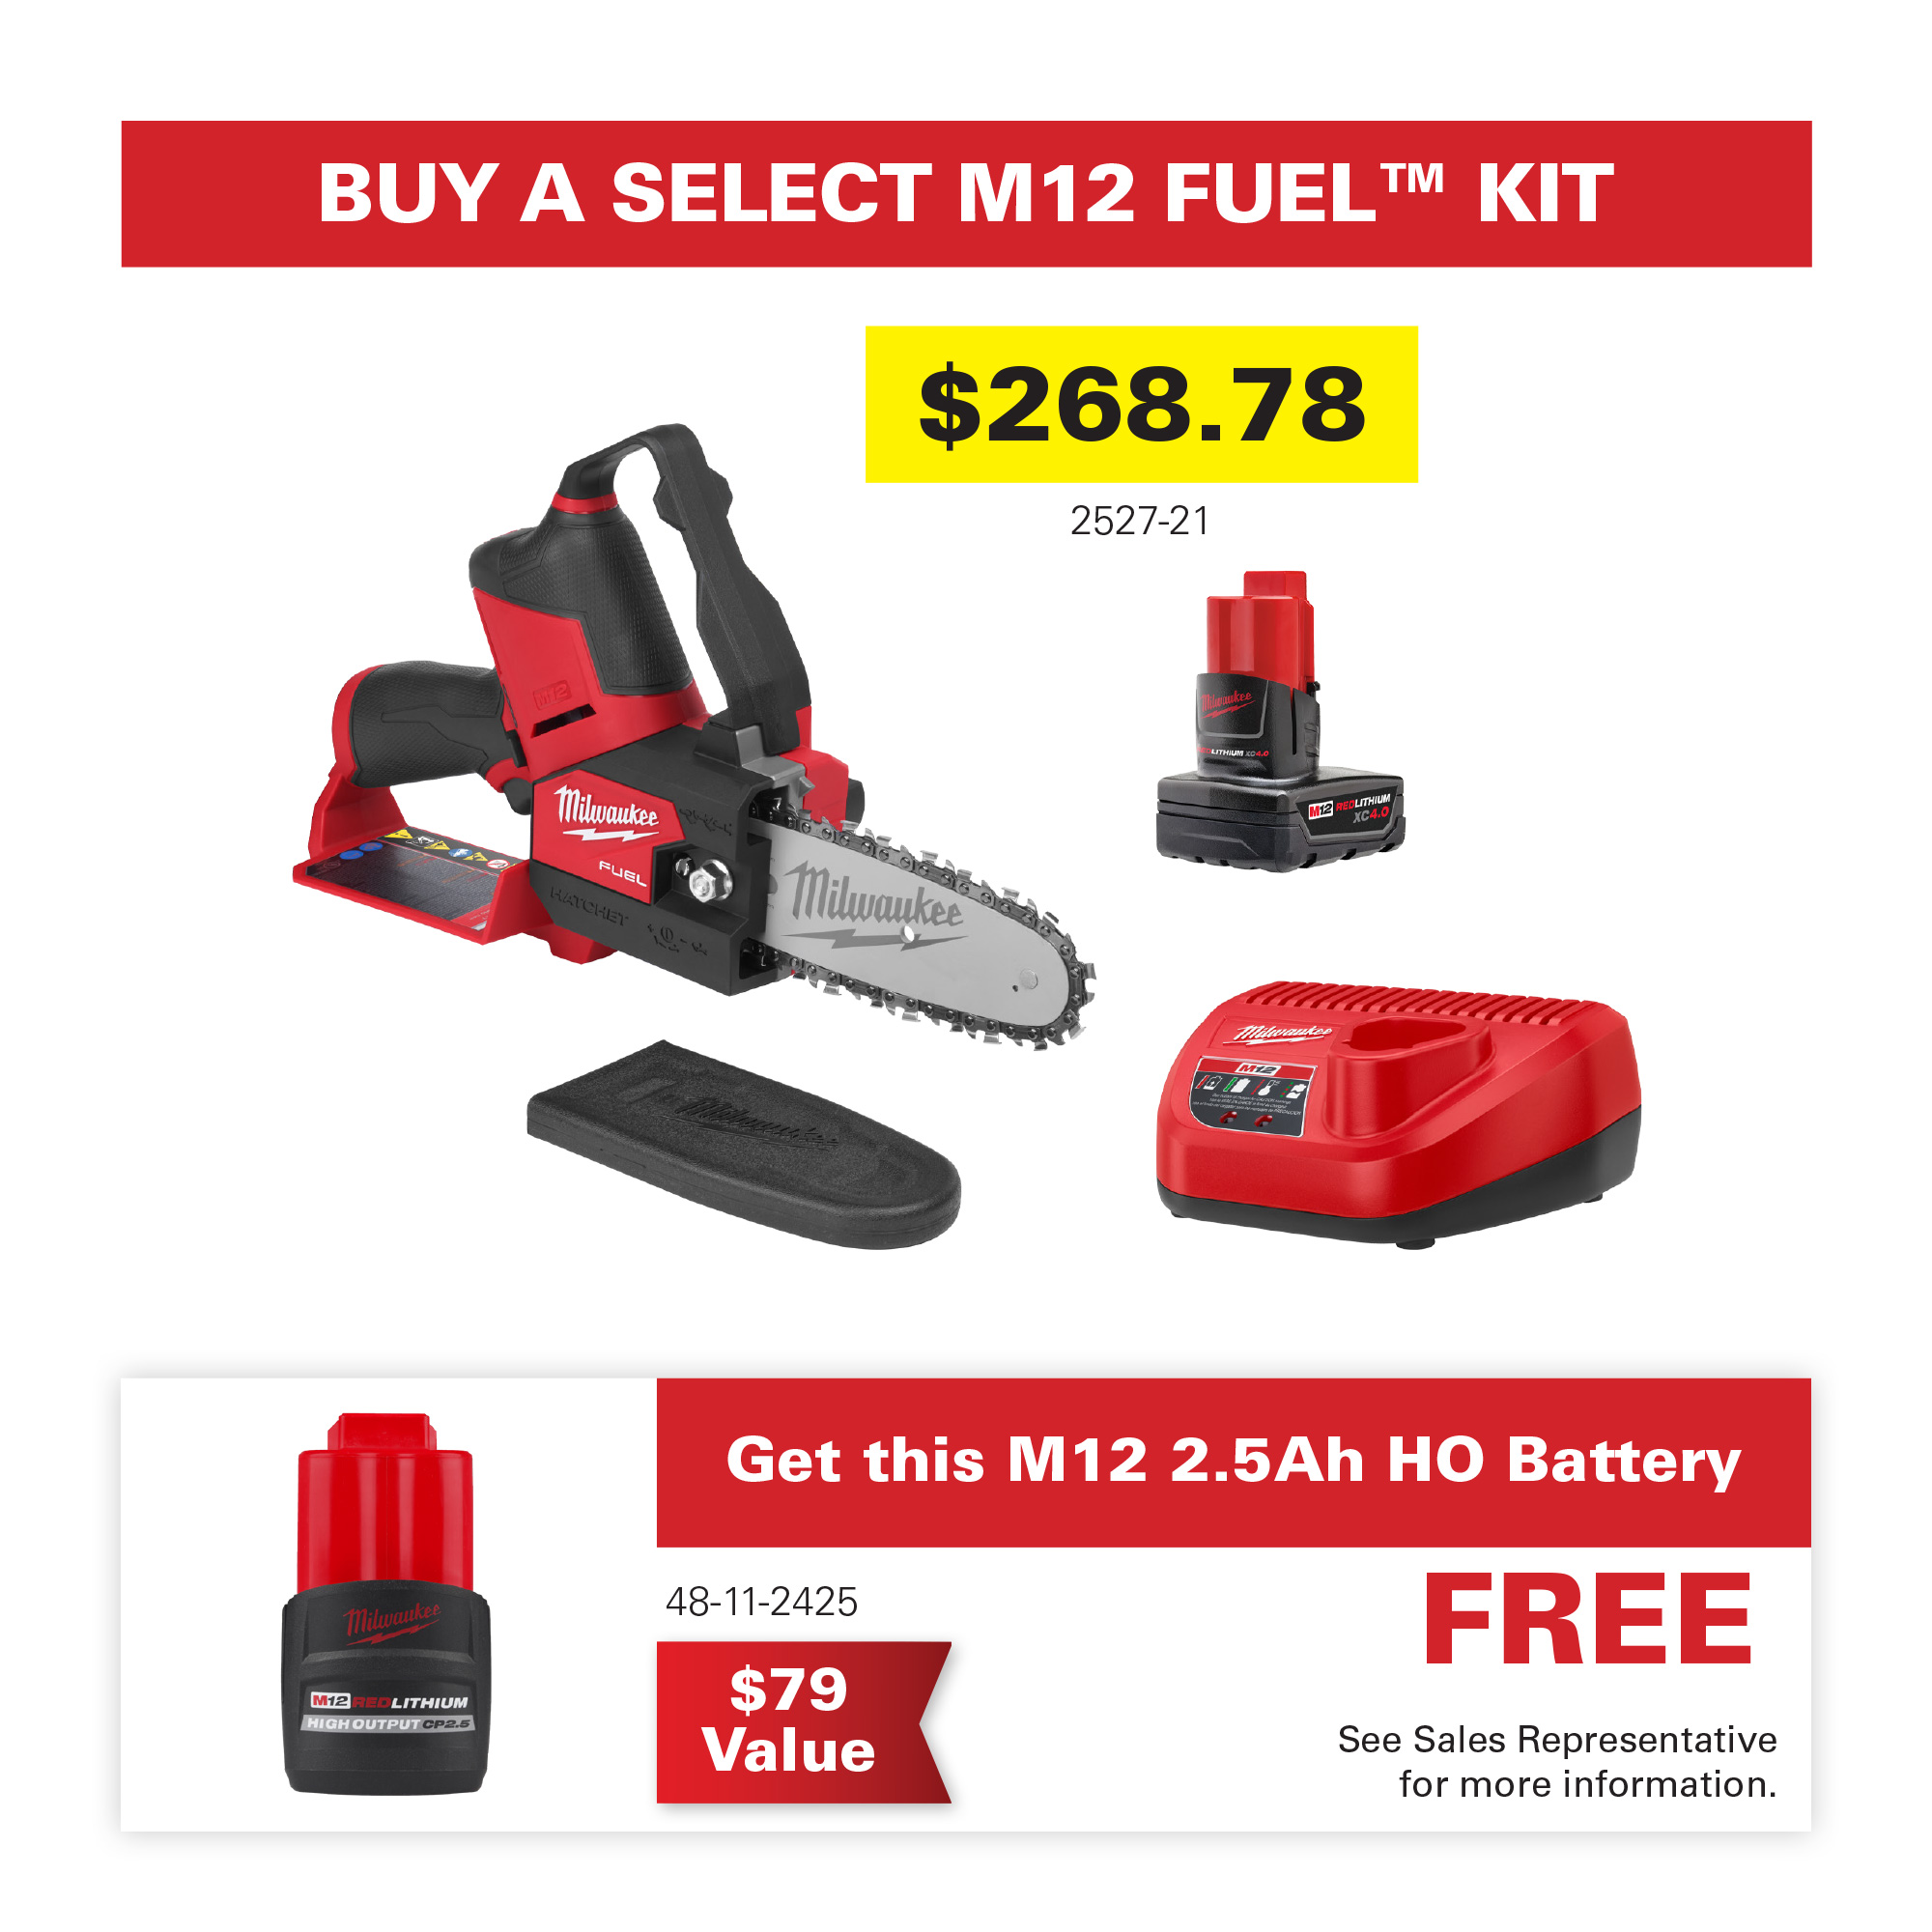 Buy M12 Fuel Kit get FREE Battery